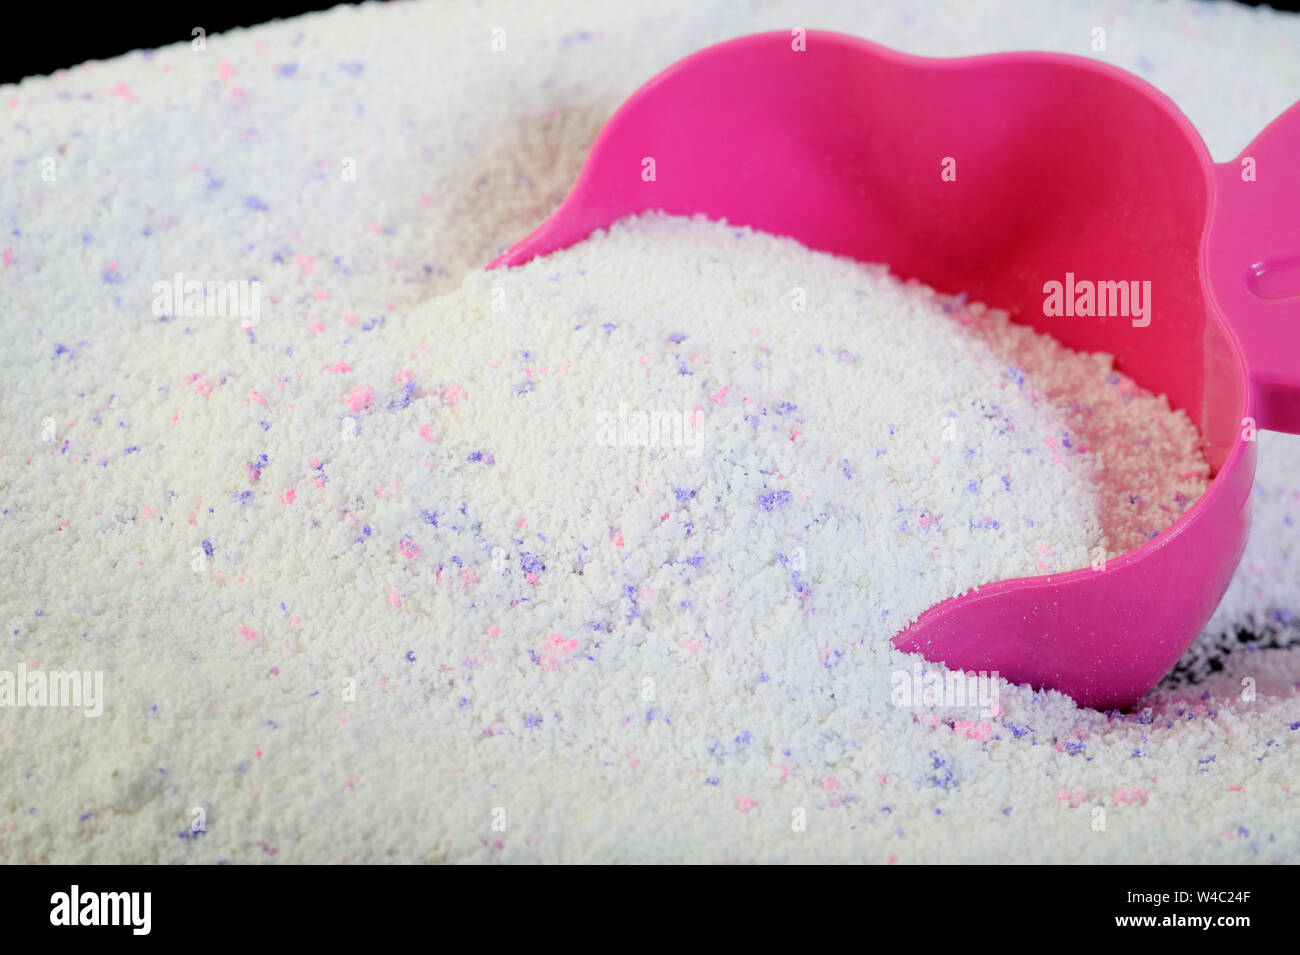 detergent washing powder for washing machine with plastic scoop Stock Photo